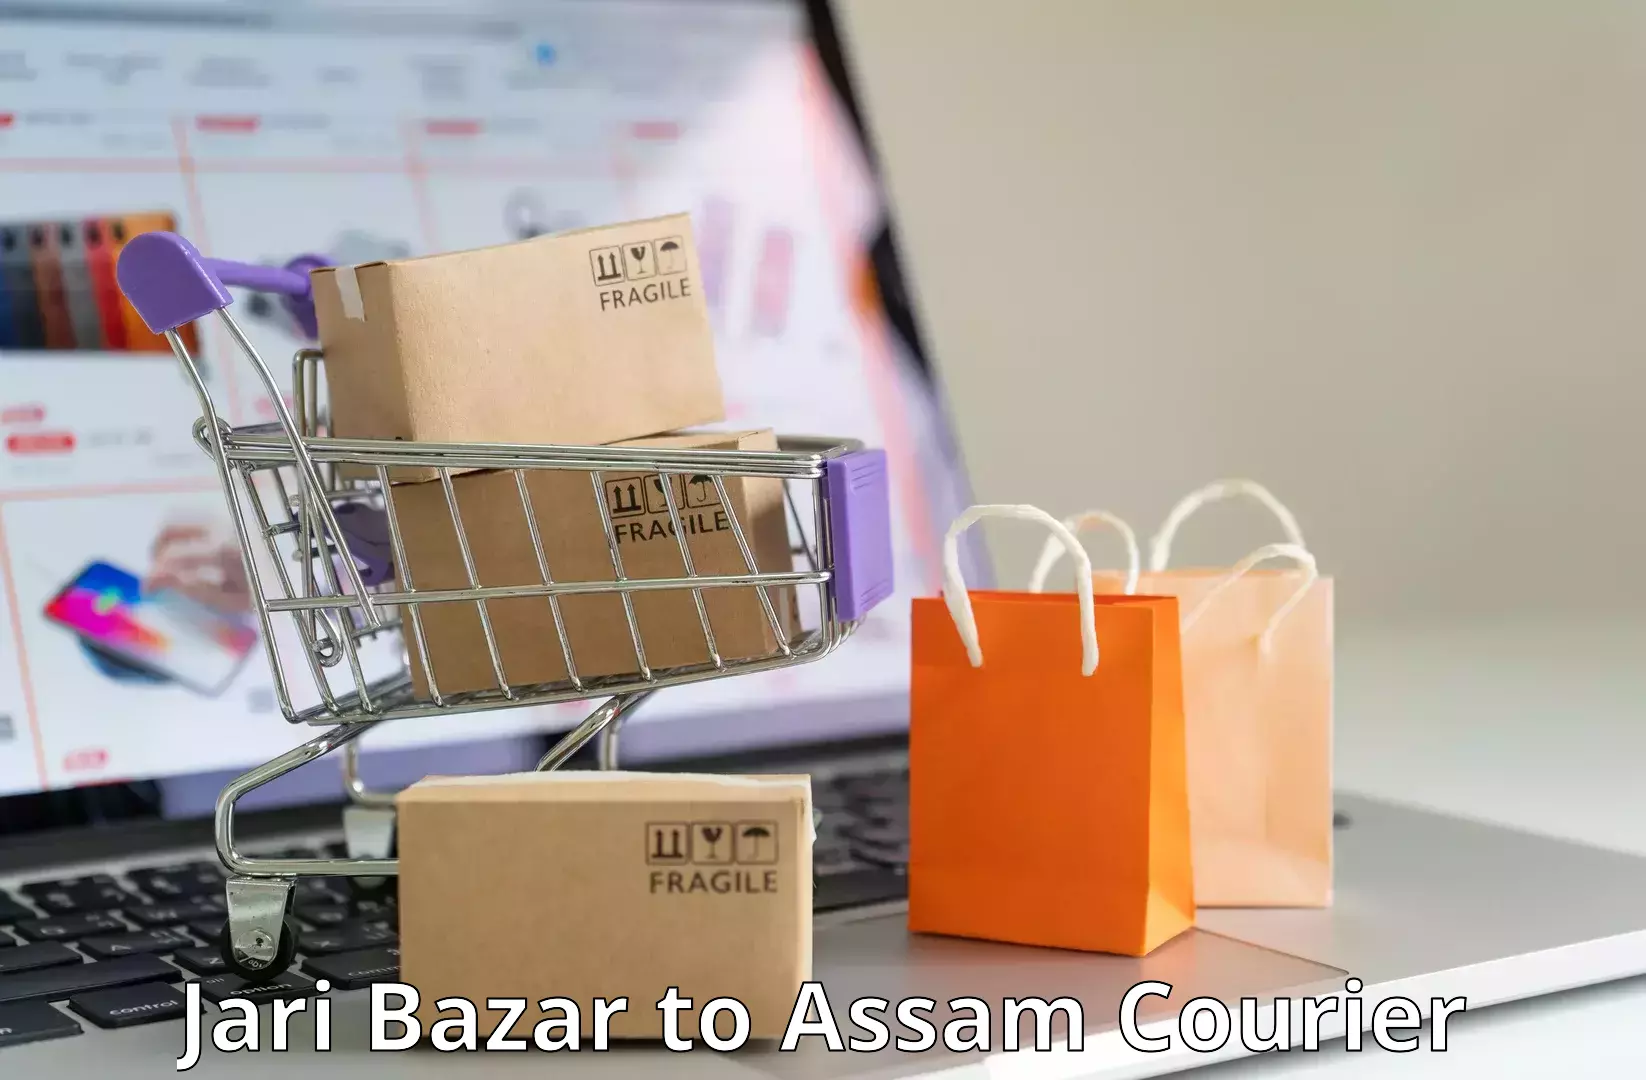 Nationwide delivery network in Jari Bazar to Kabuganj